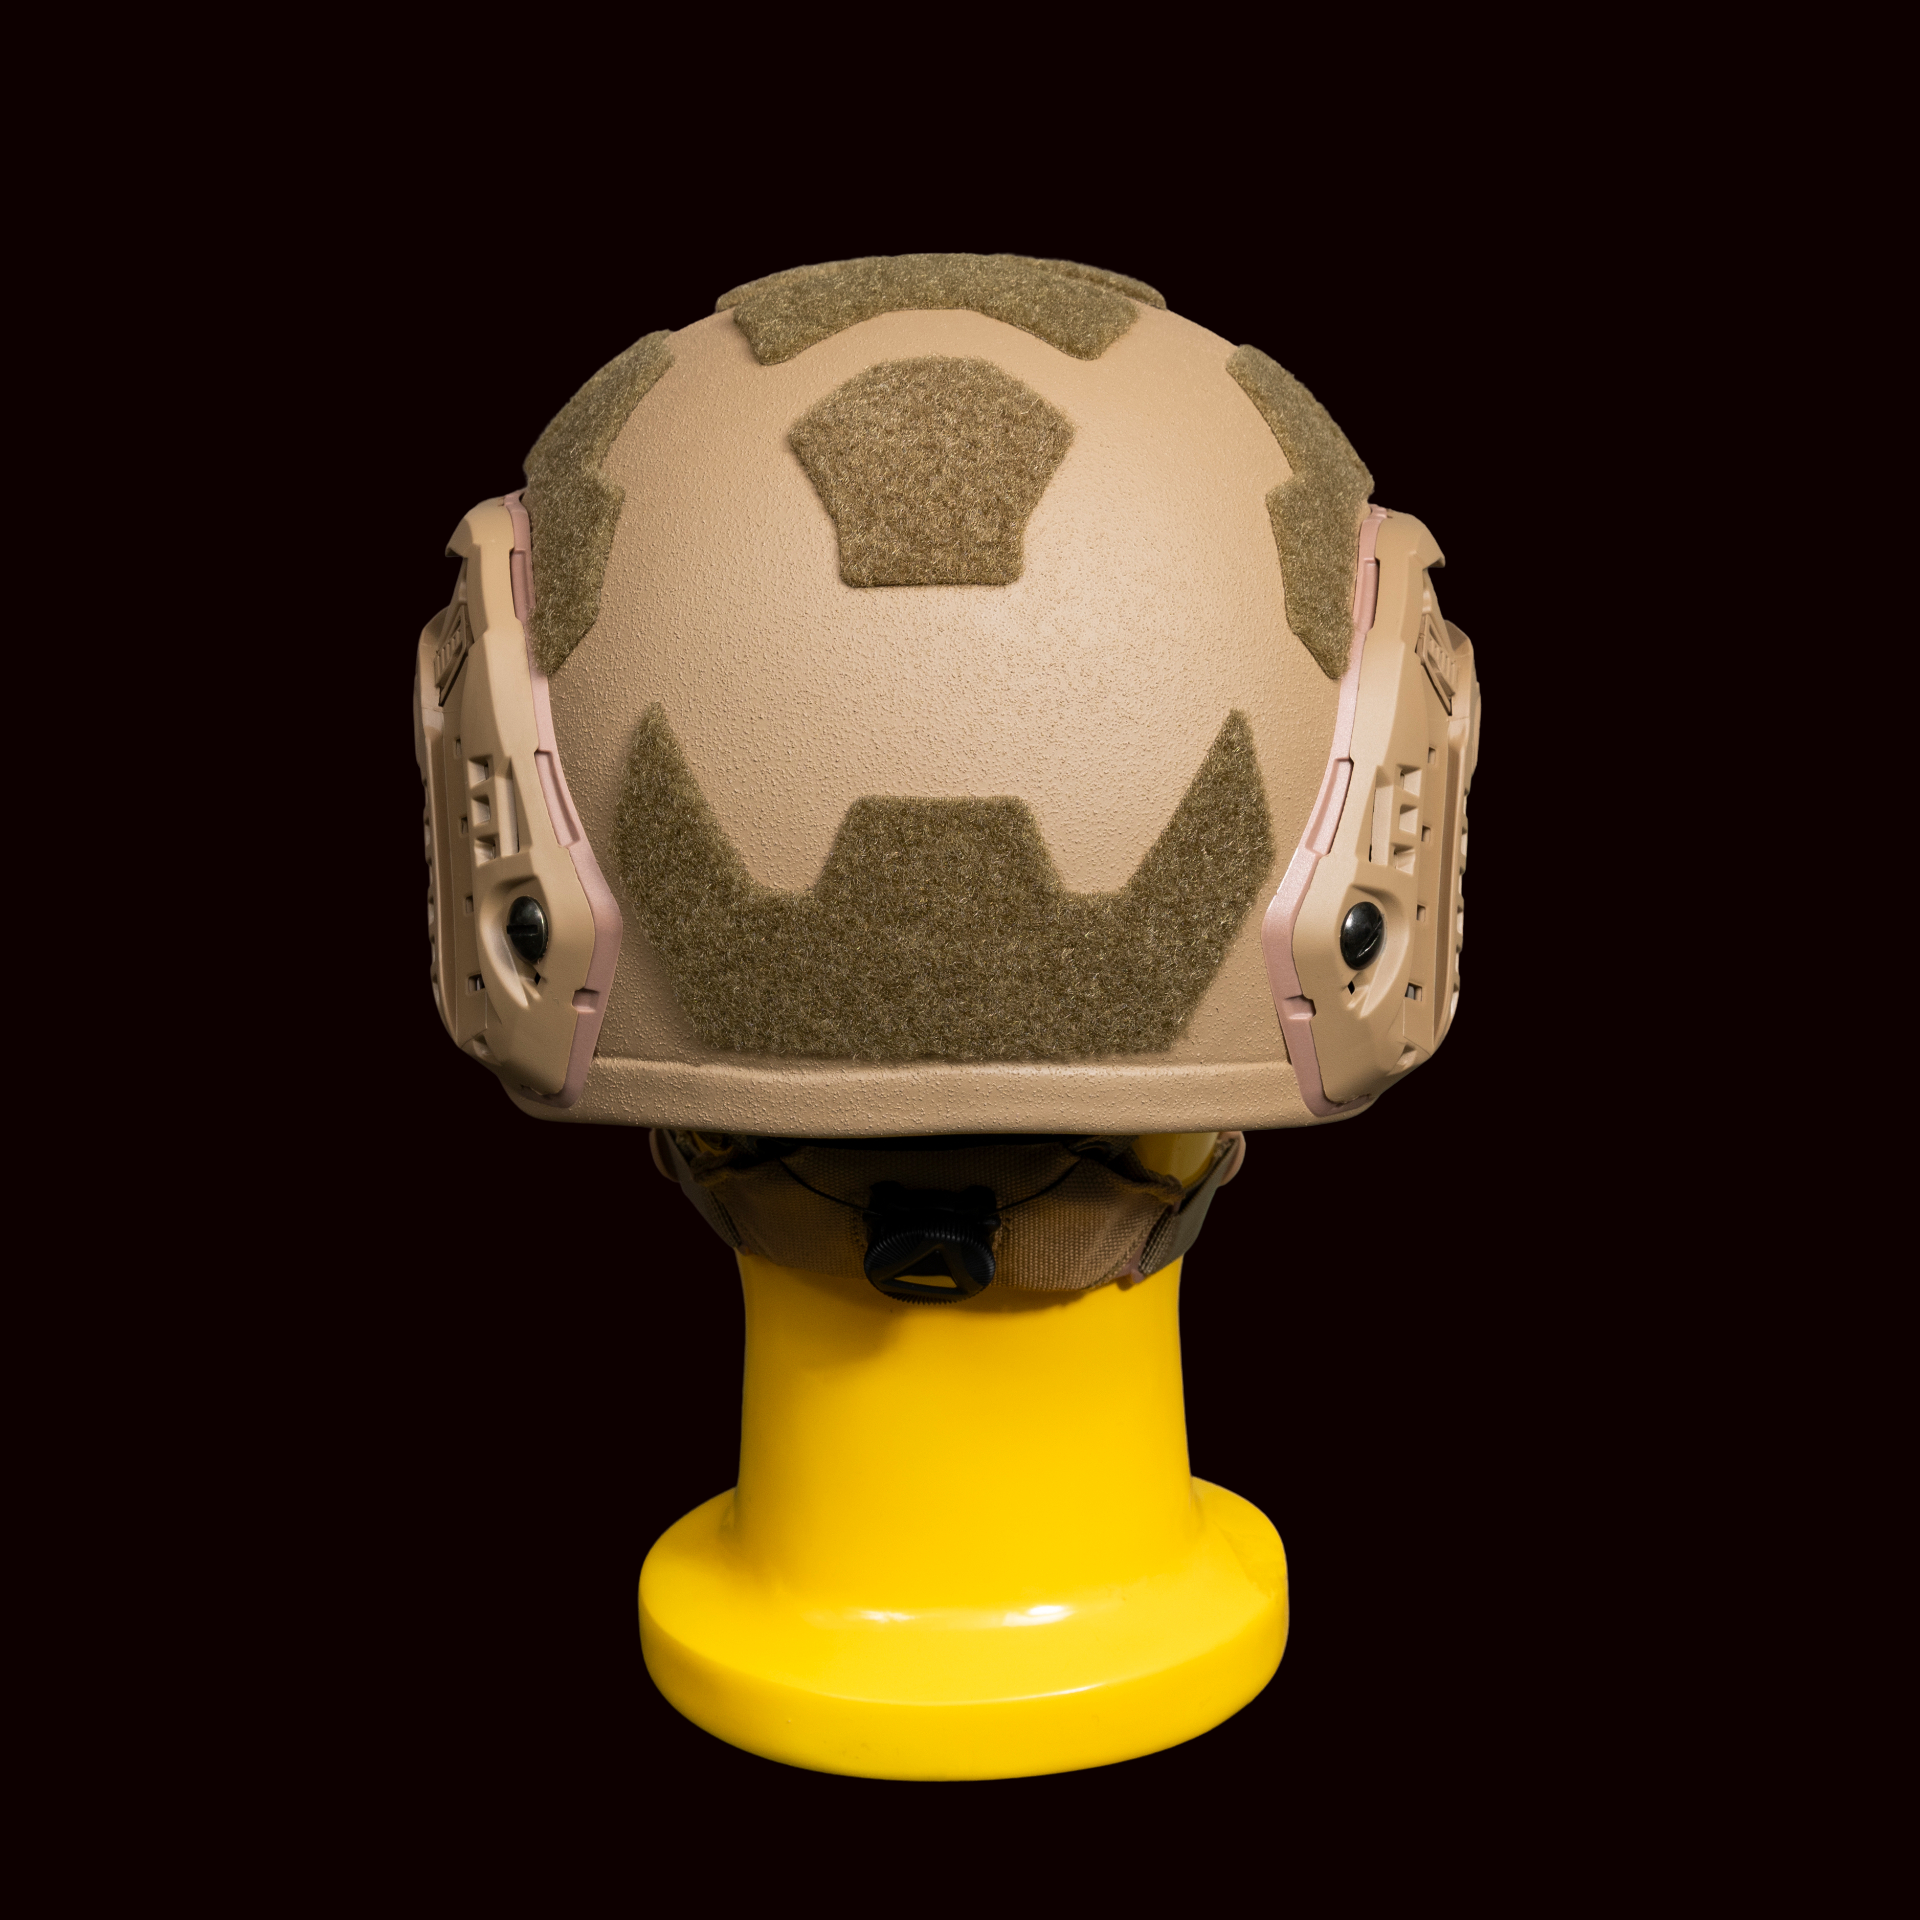 Militech Super High-Cut Level IIIA Helmet